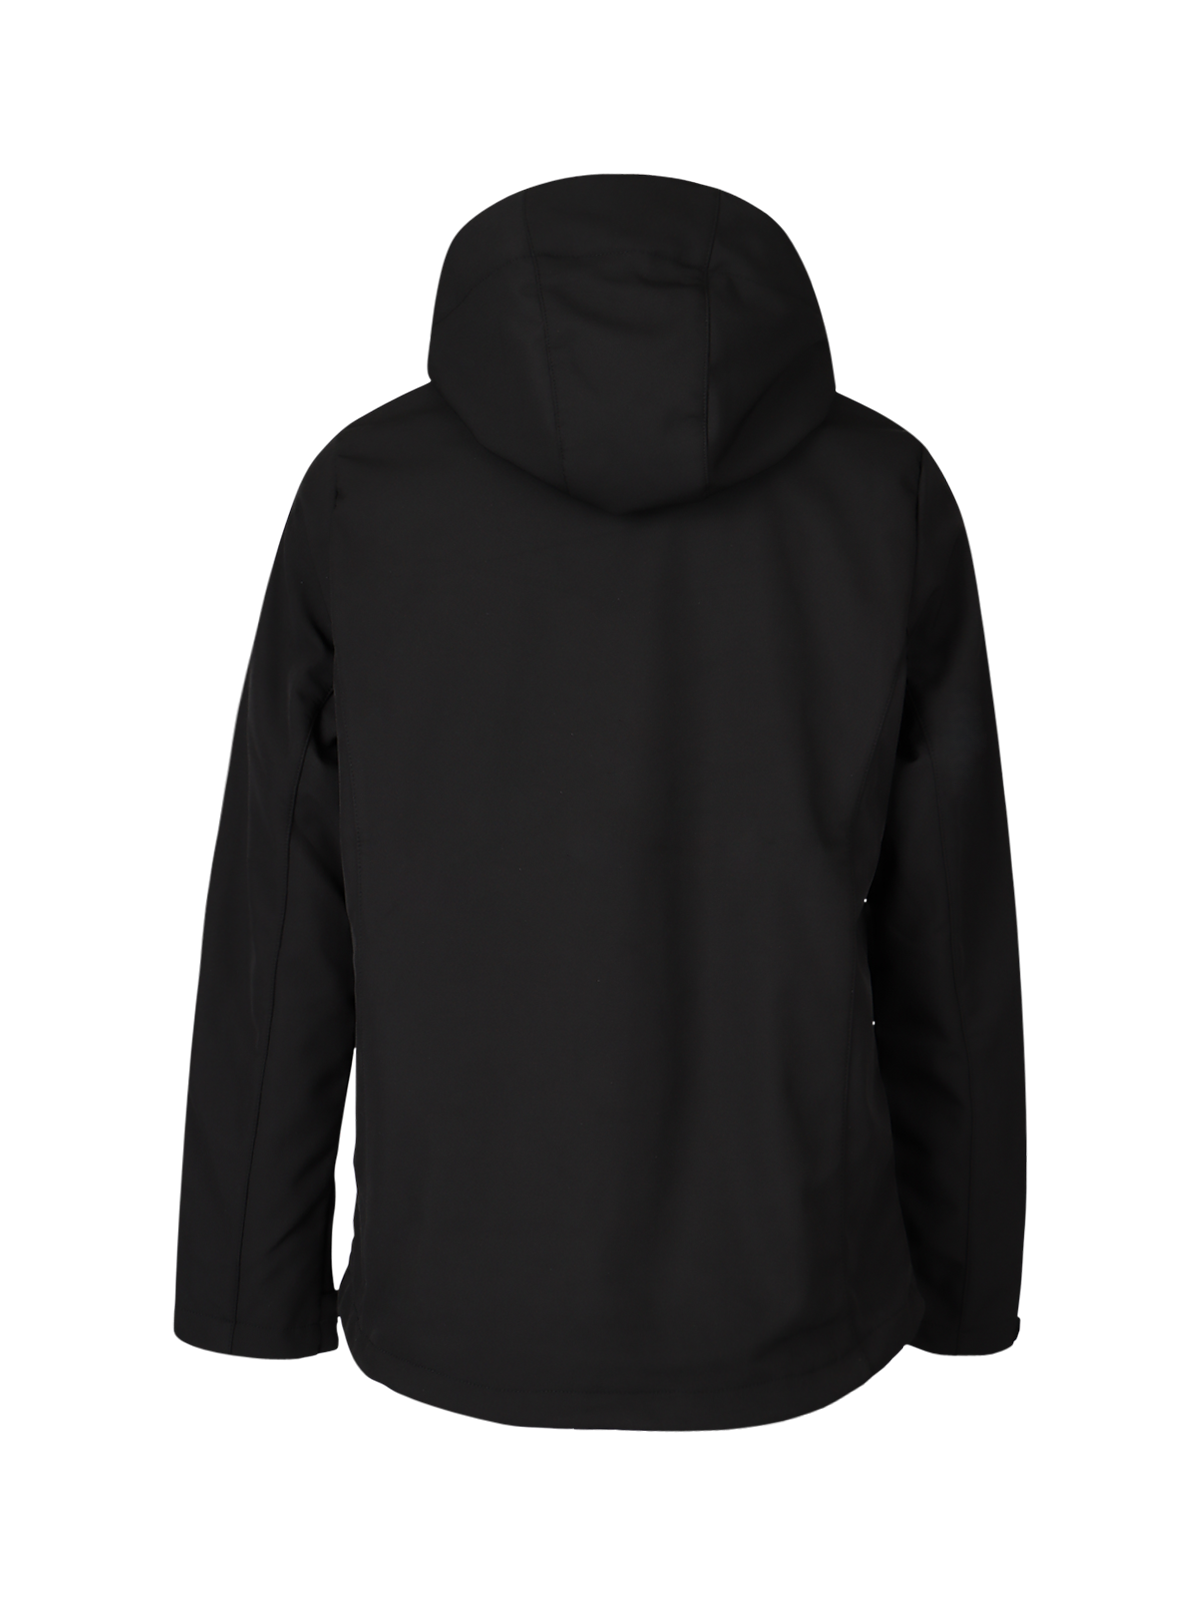 Joos-N Women Softshell Jacket | Black